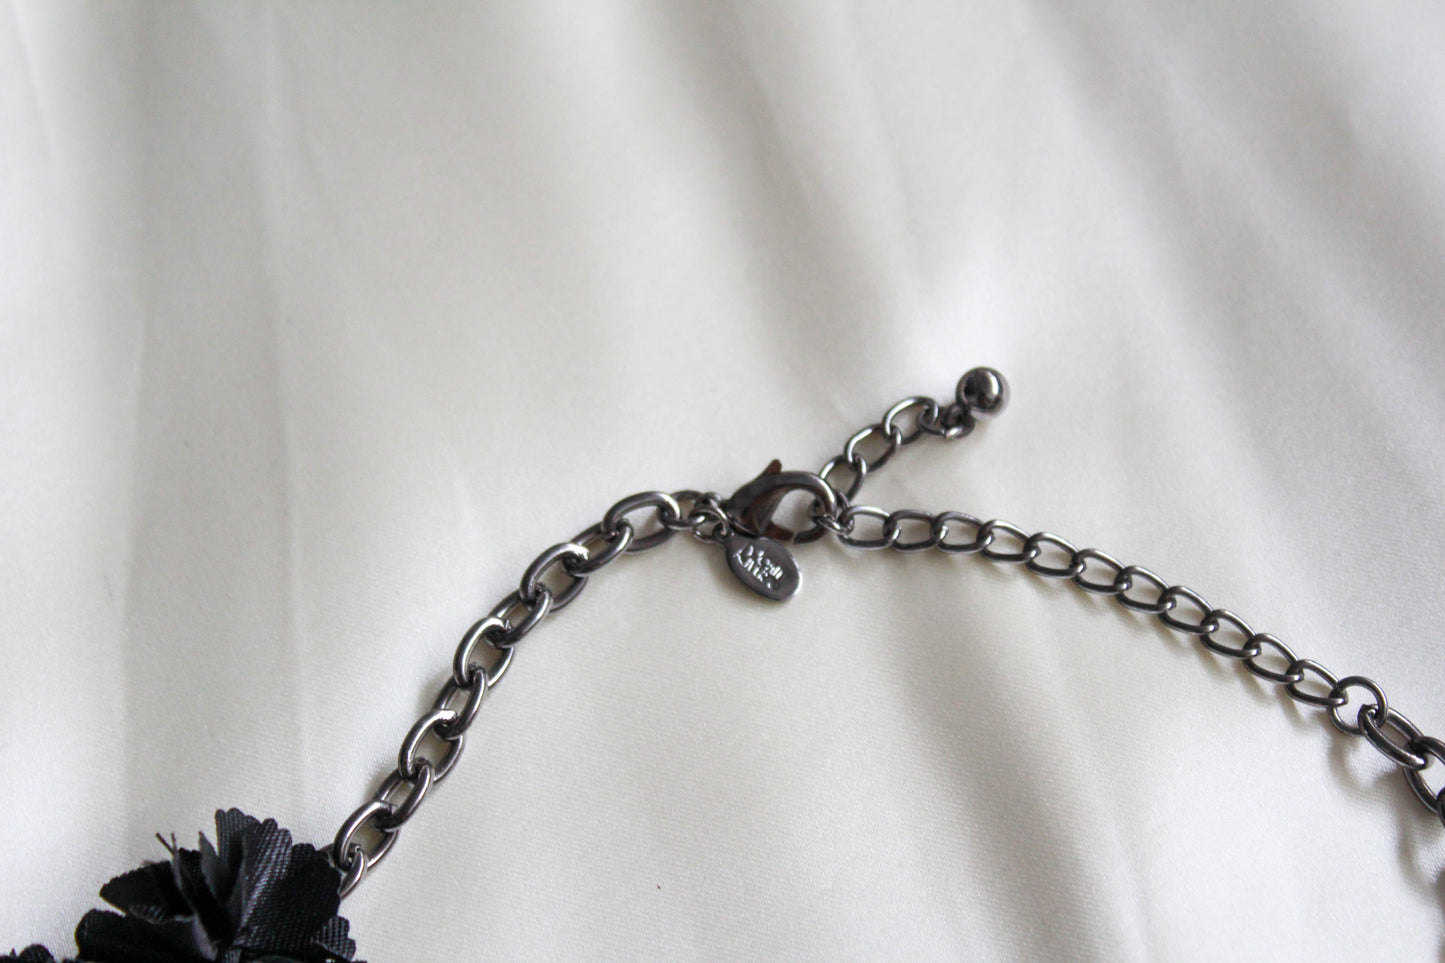 1990s Black Fabric Rosette Necklace